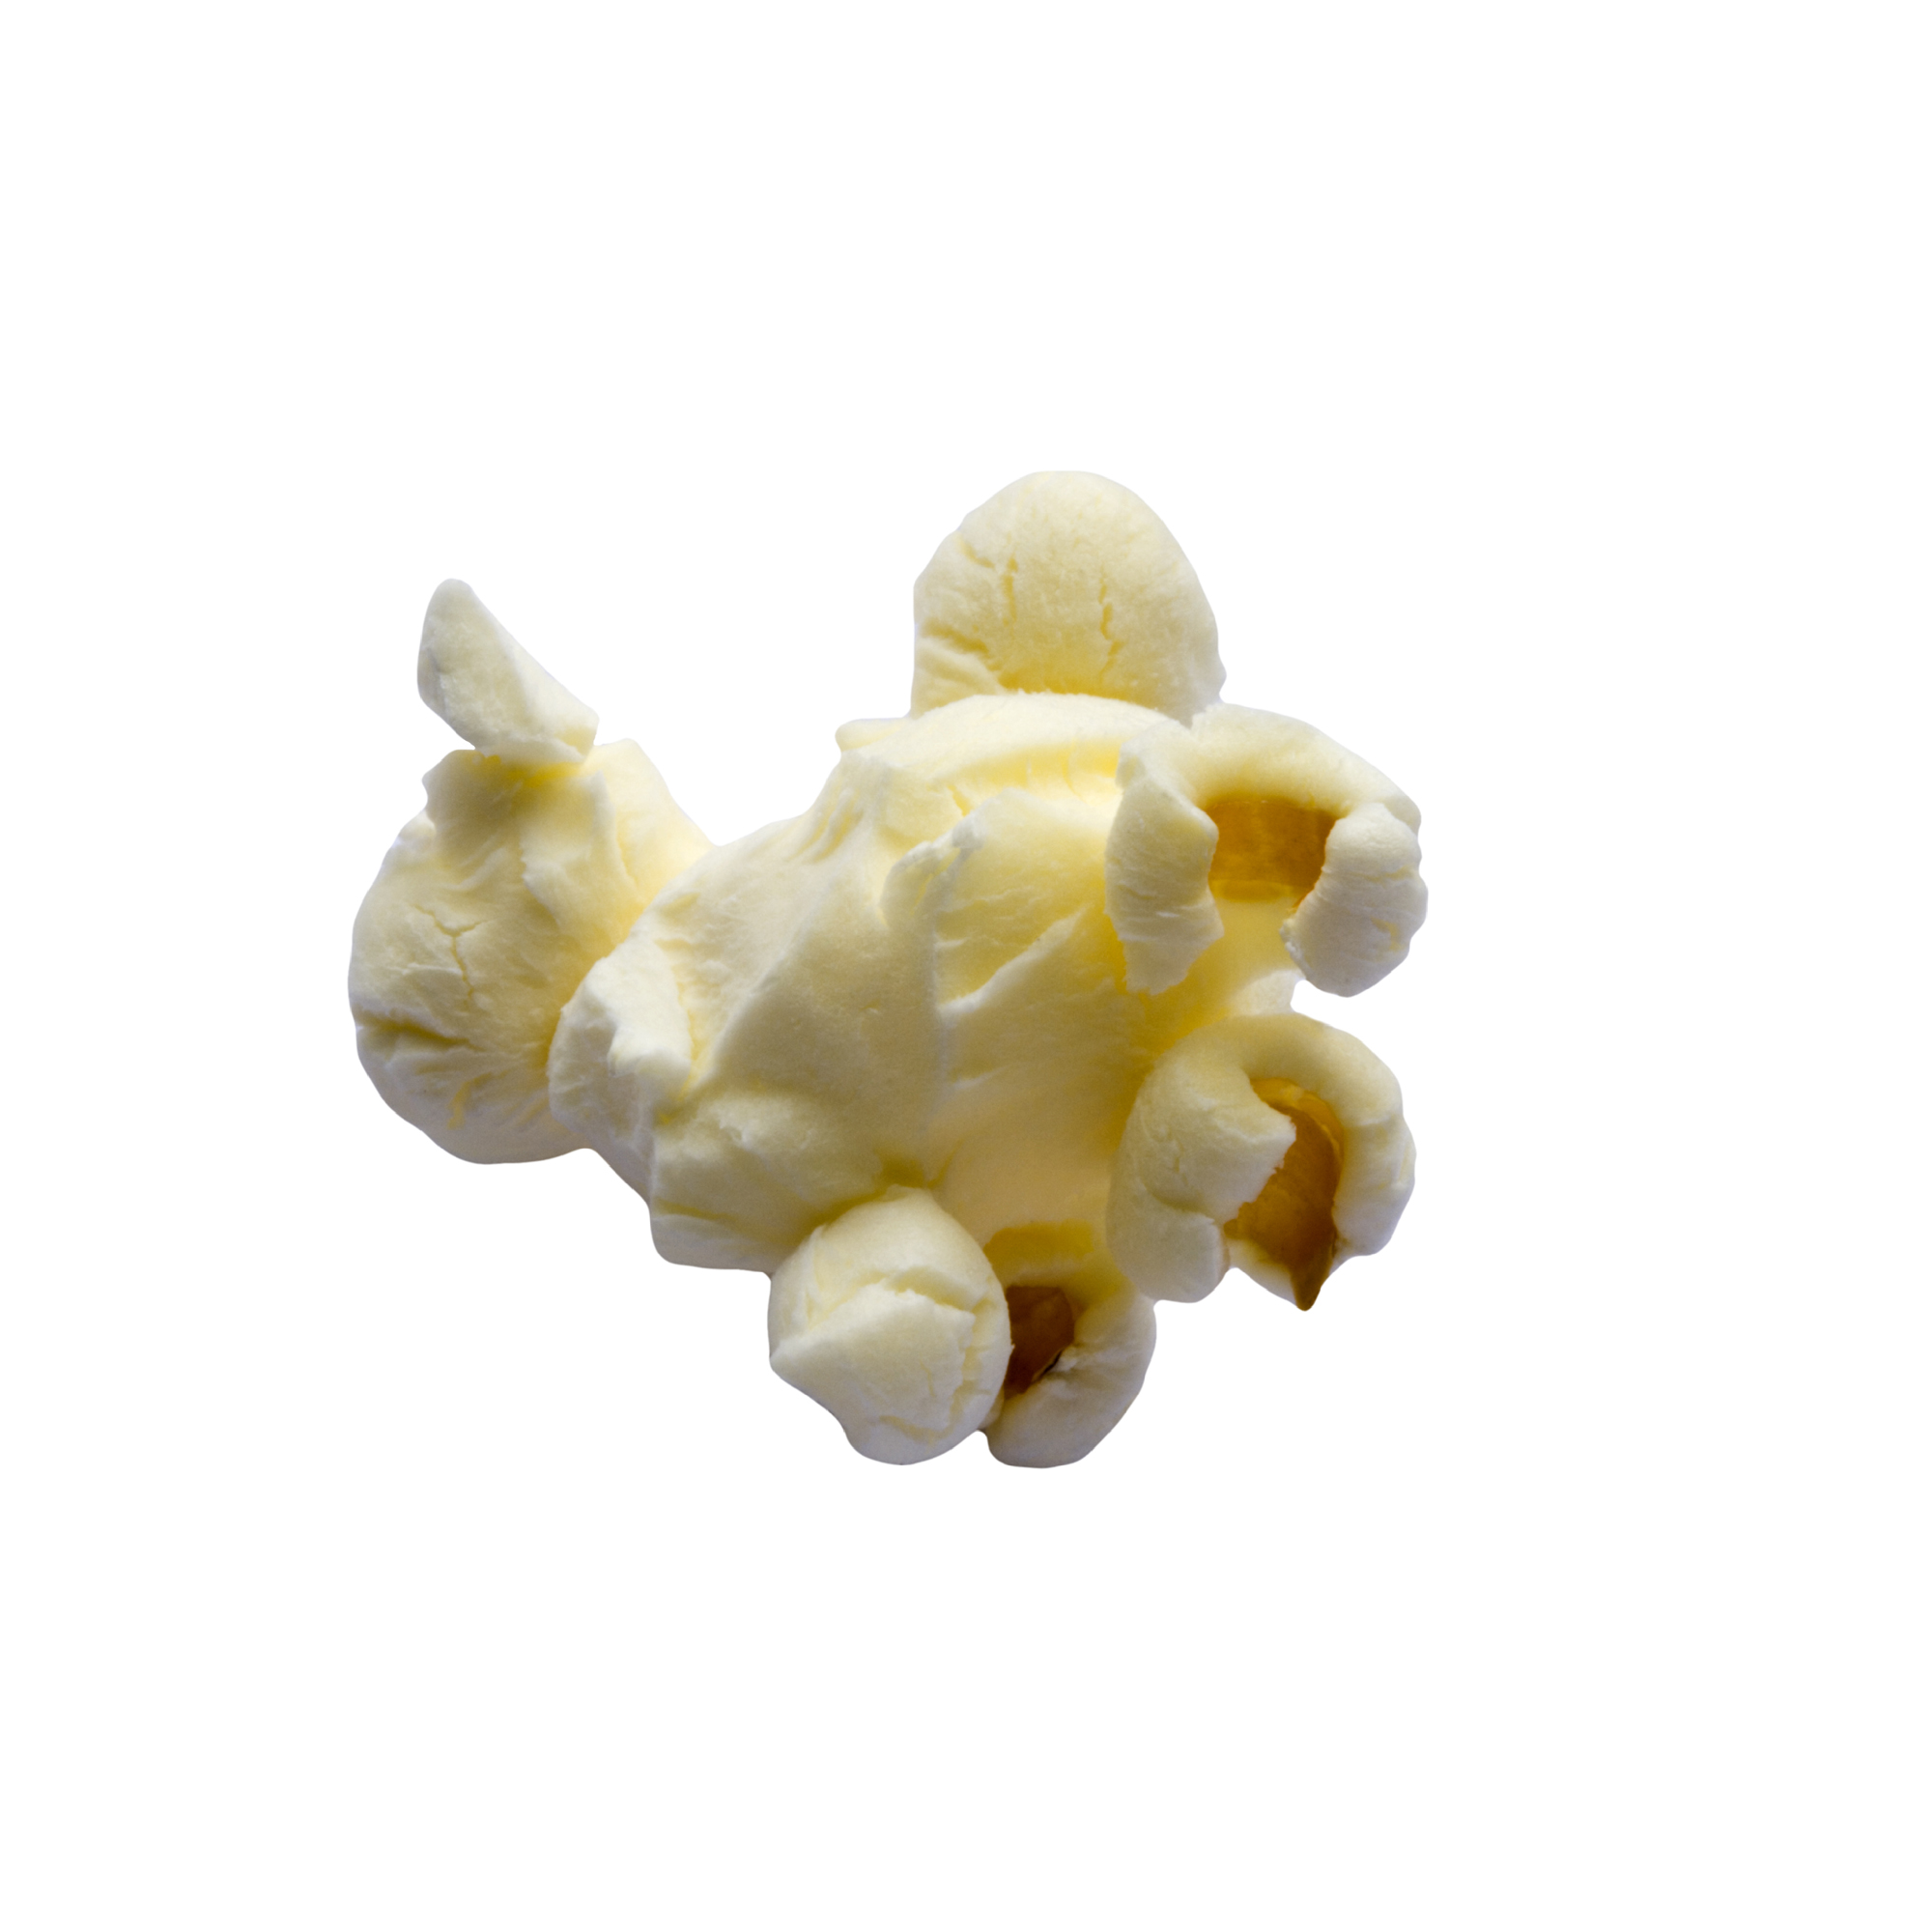 Single Popcorn Kernel Clipart Single Popcorn Kernel